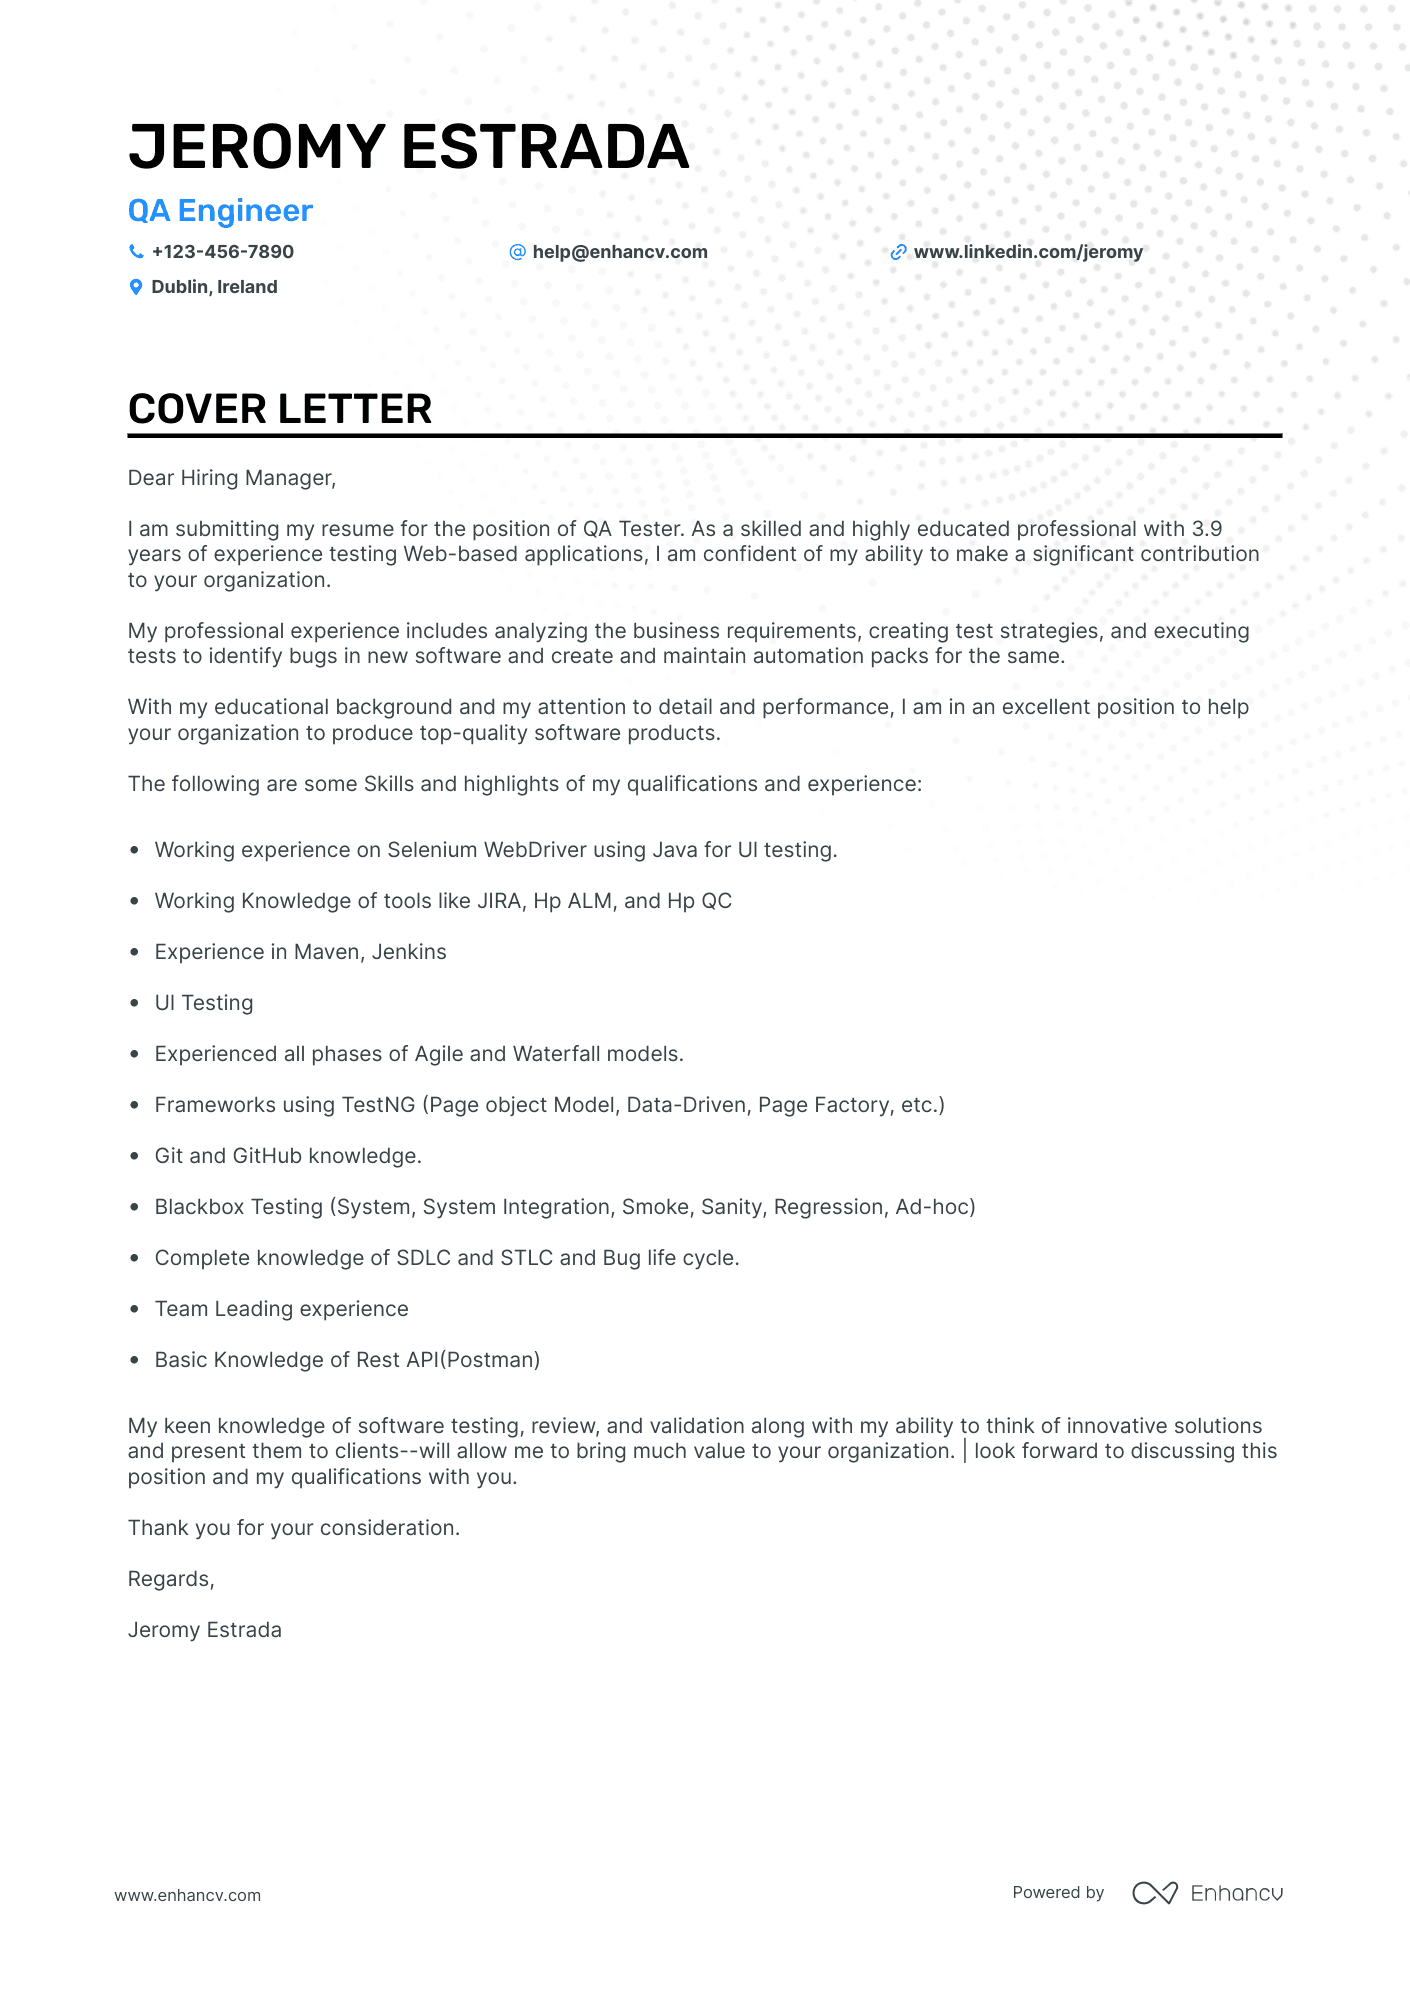 Short Cover Letter Sample 2024 [Complete Guide]